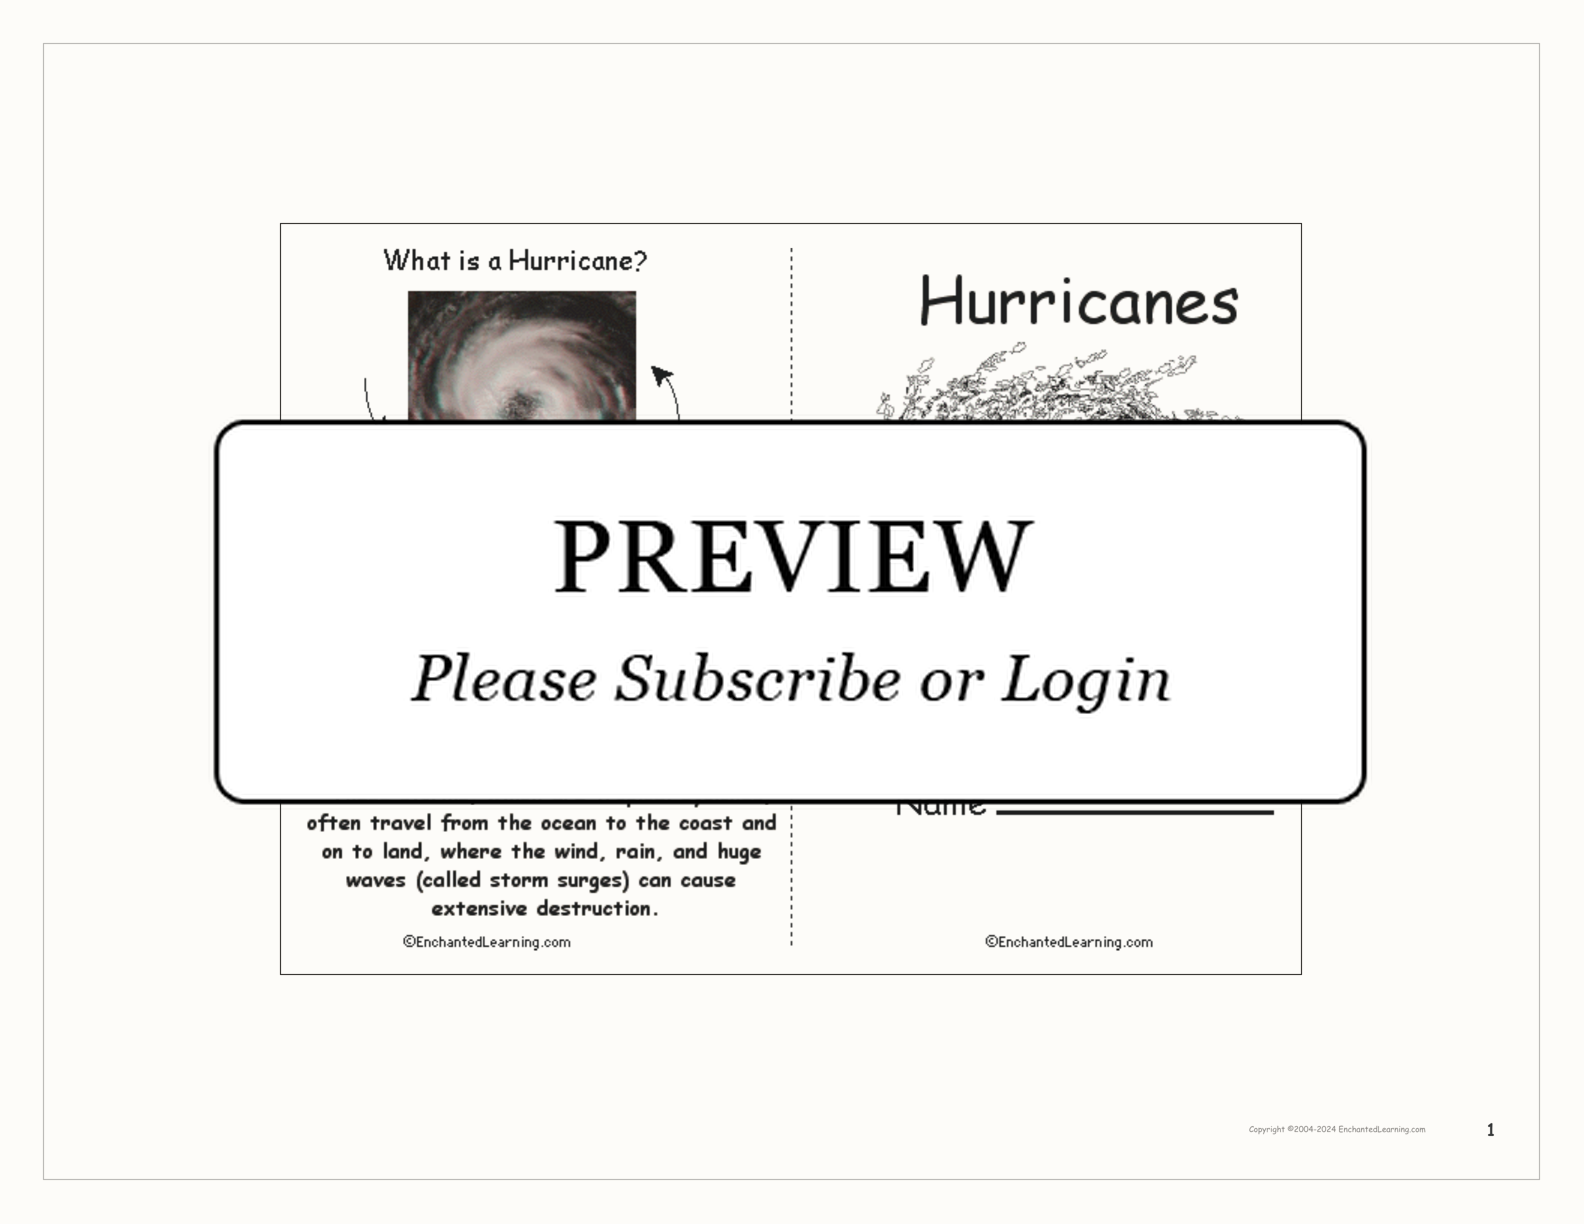 Hurricane Book interactive printout page 1